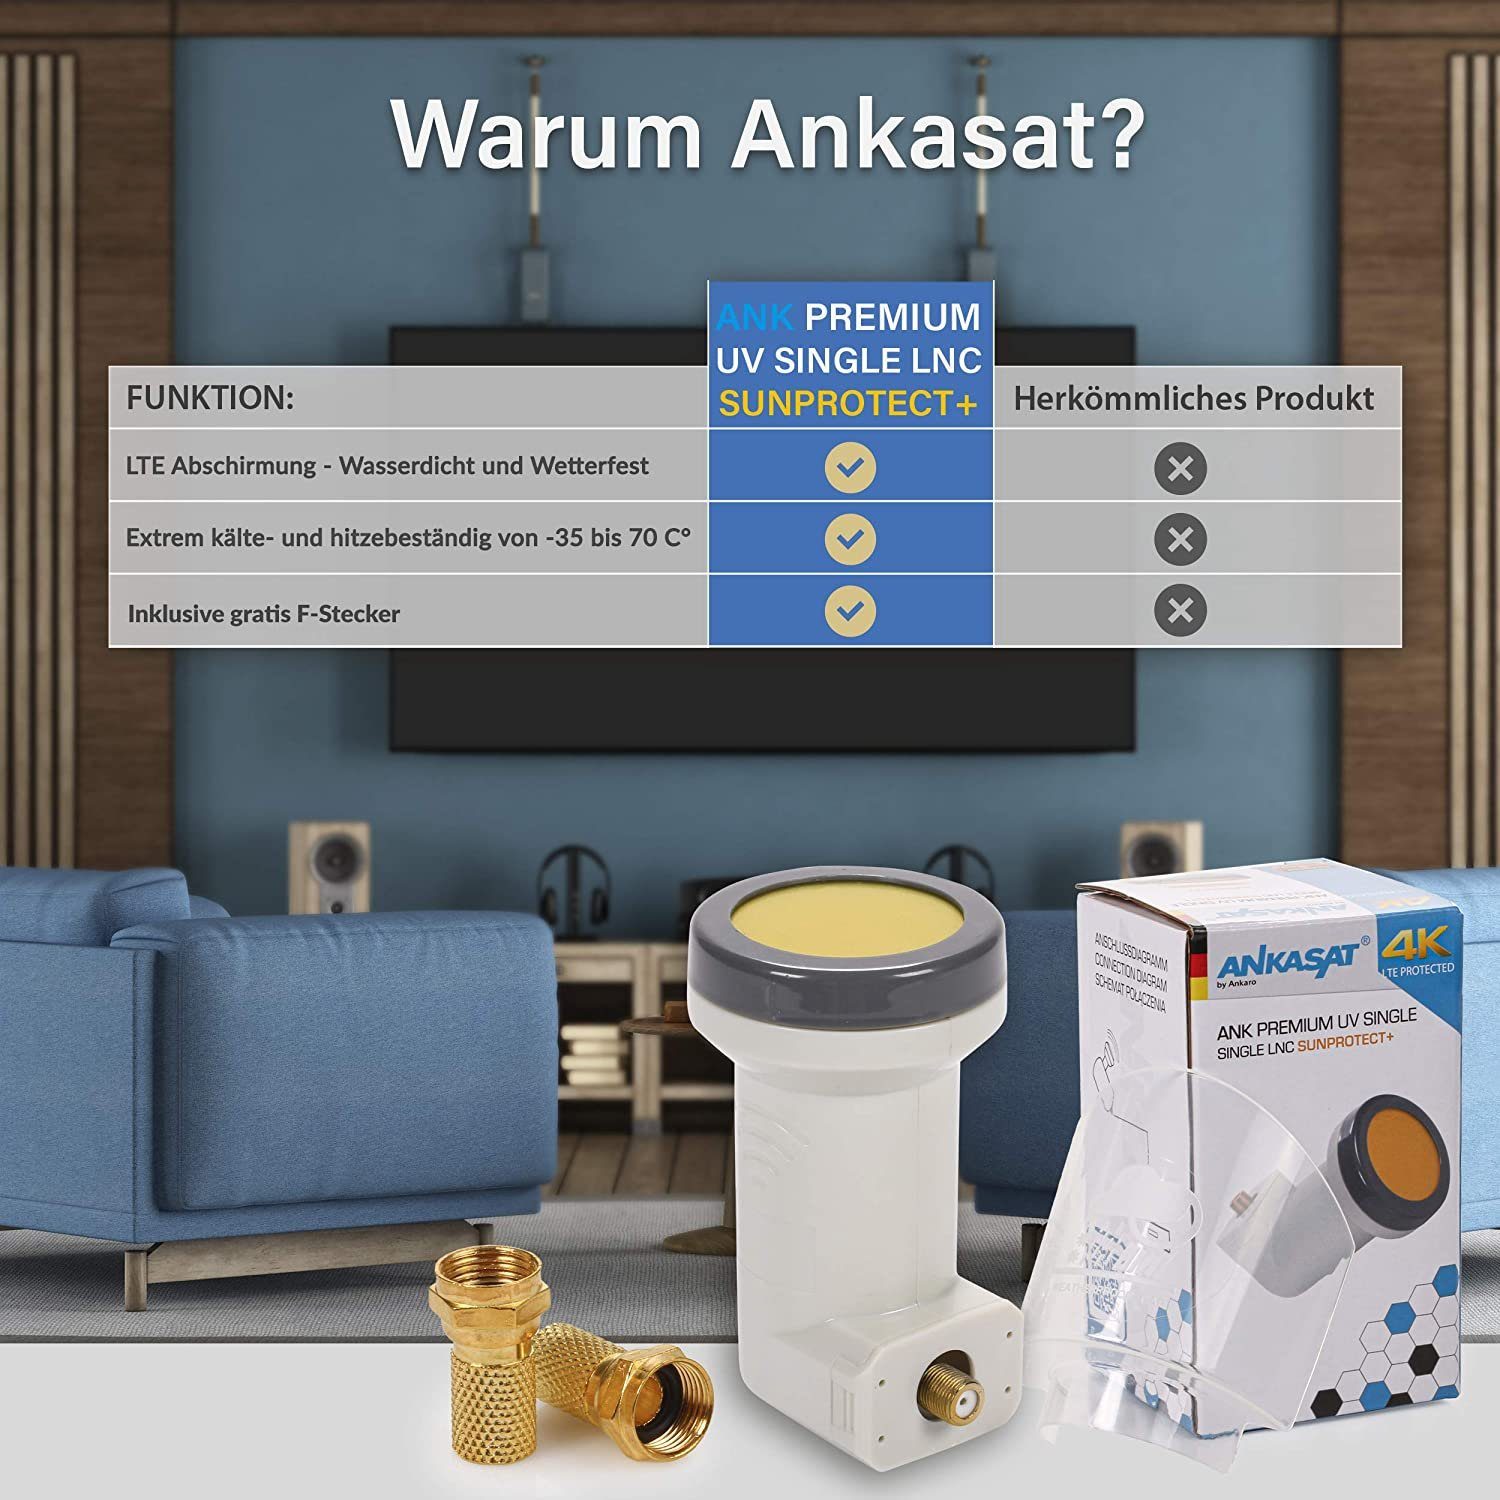 ANKASAT Premium UV - Ankaro Single LNB Wetterschutz Teilnehmer + 1 Kappe, Universal-Single-LNB ANK